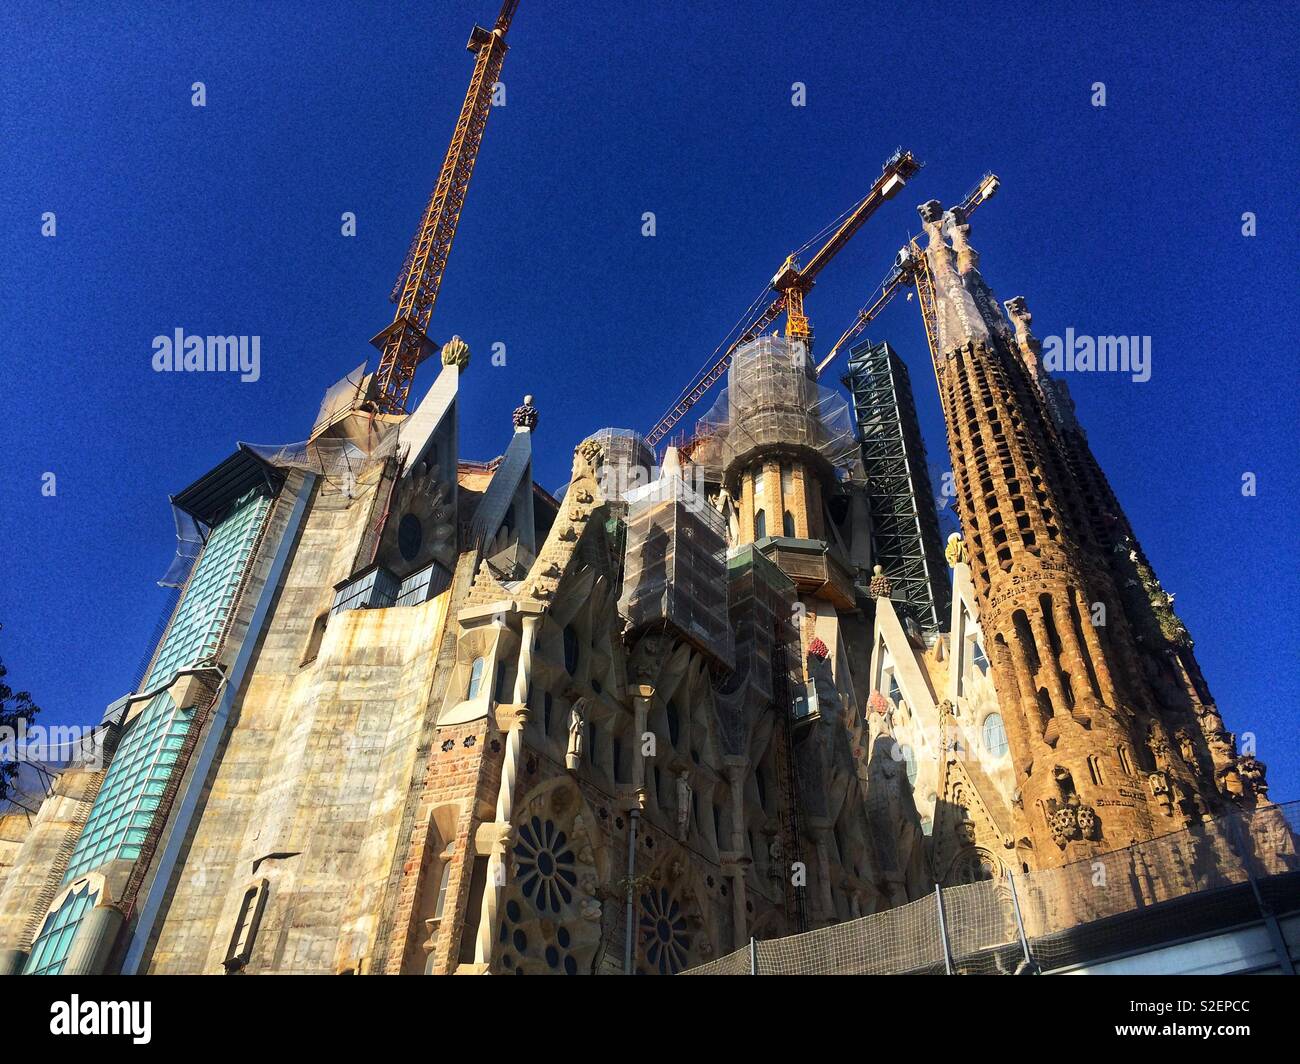 Architectural details on Sagrada Familia basilica in Barcelona Spain Stock Photo